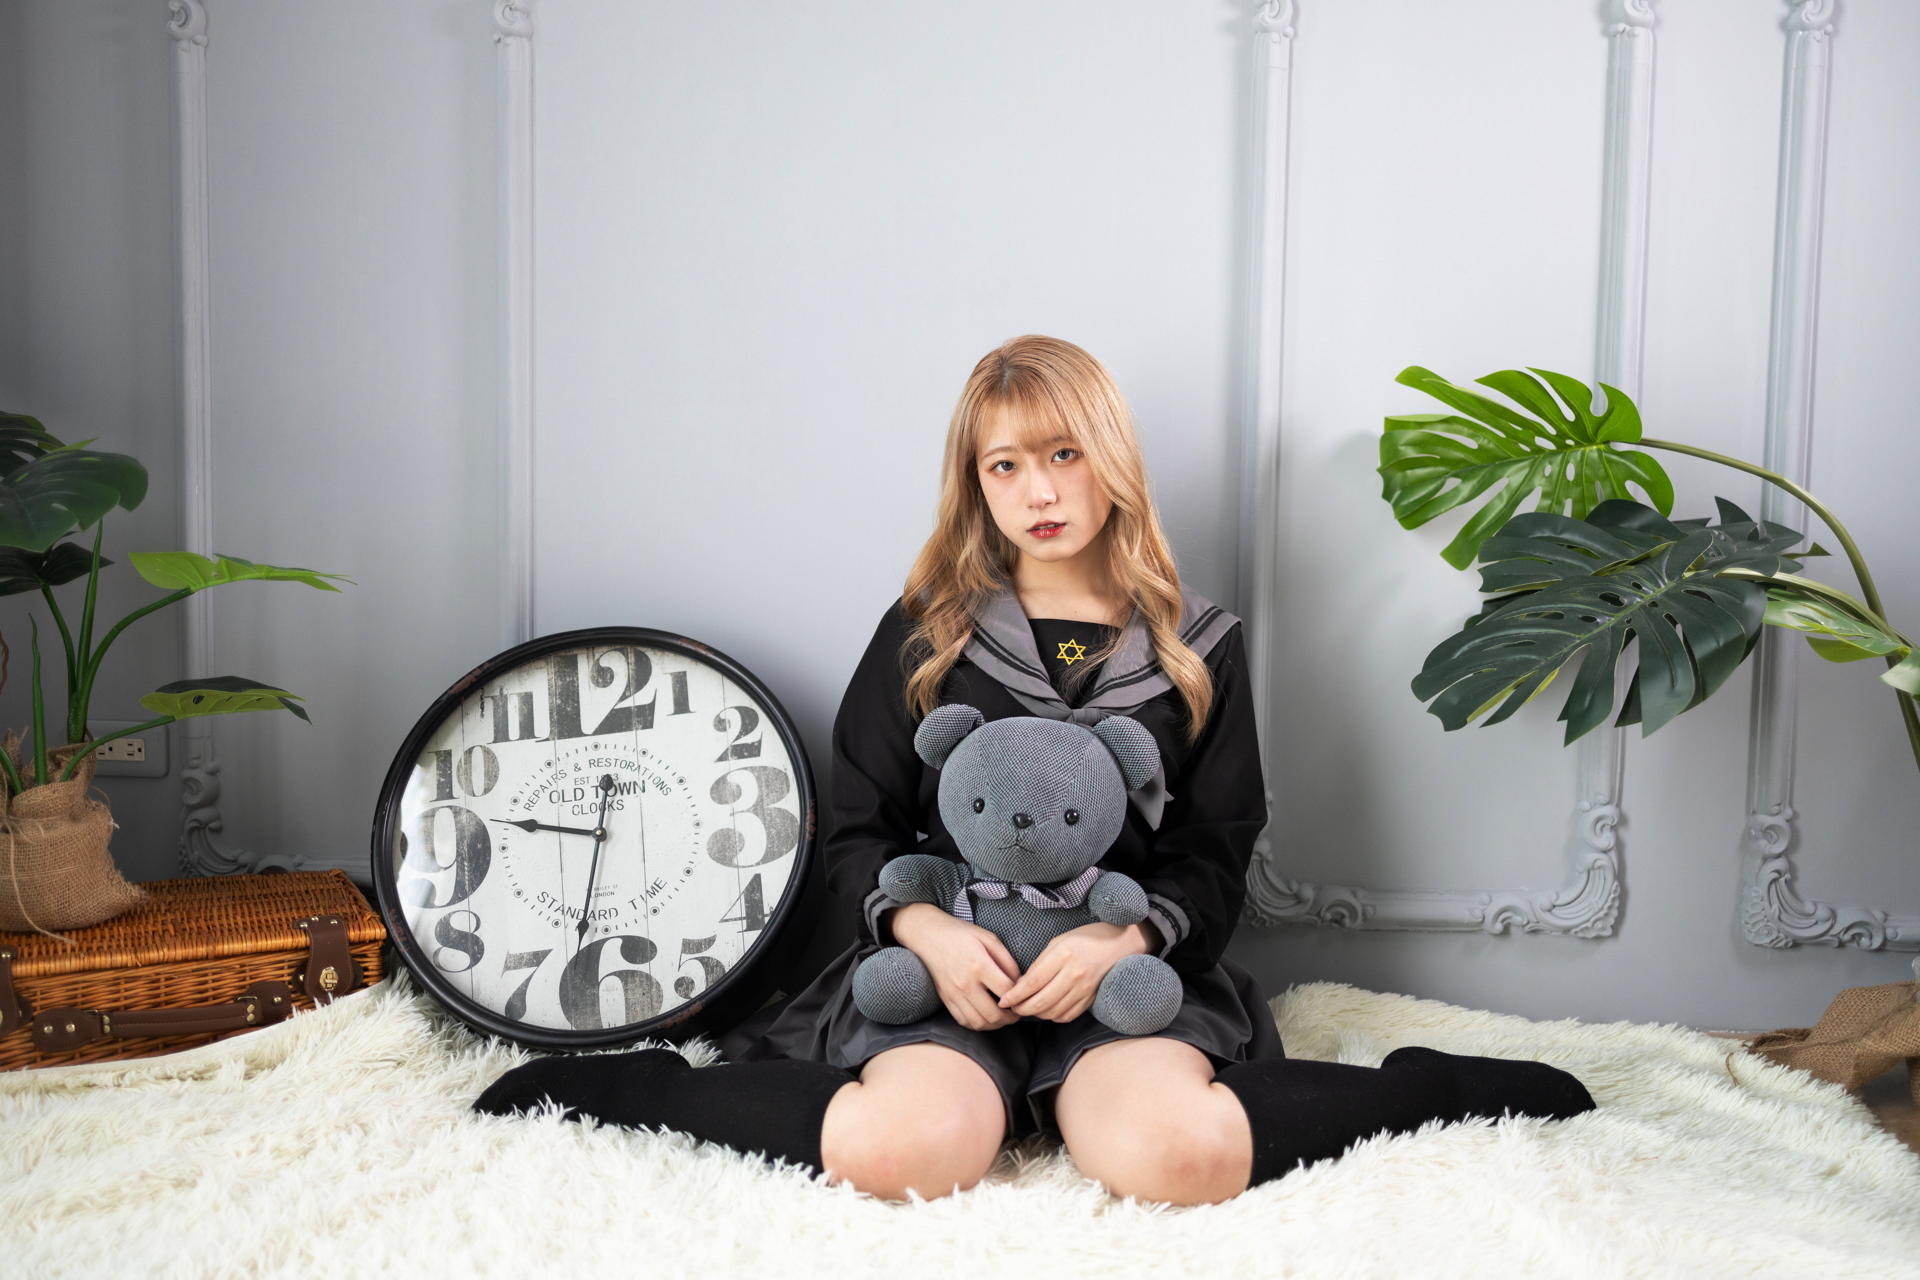 Asian Model Women Long Hair Knee High Socks Sitting Clocks Carpet Teddy Bears Plants Sailor Uniform 1920x1280